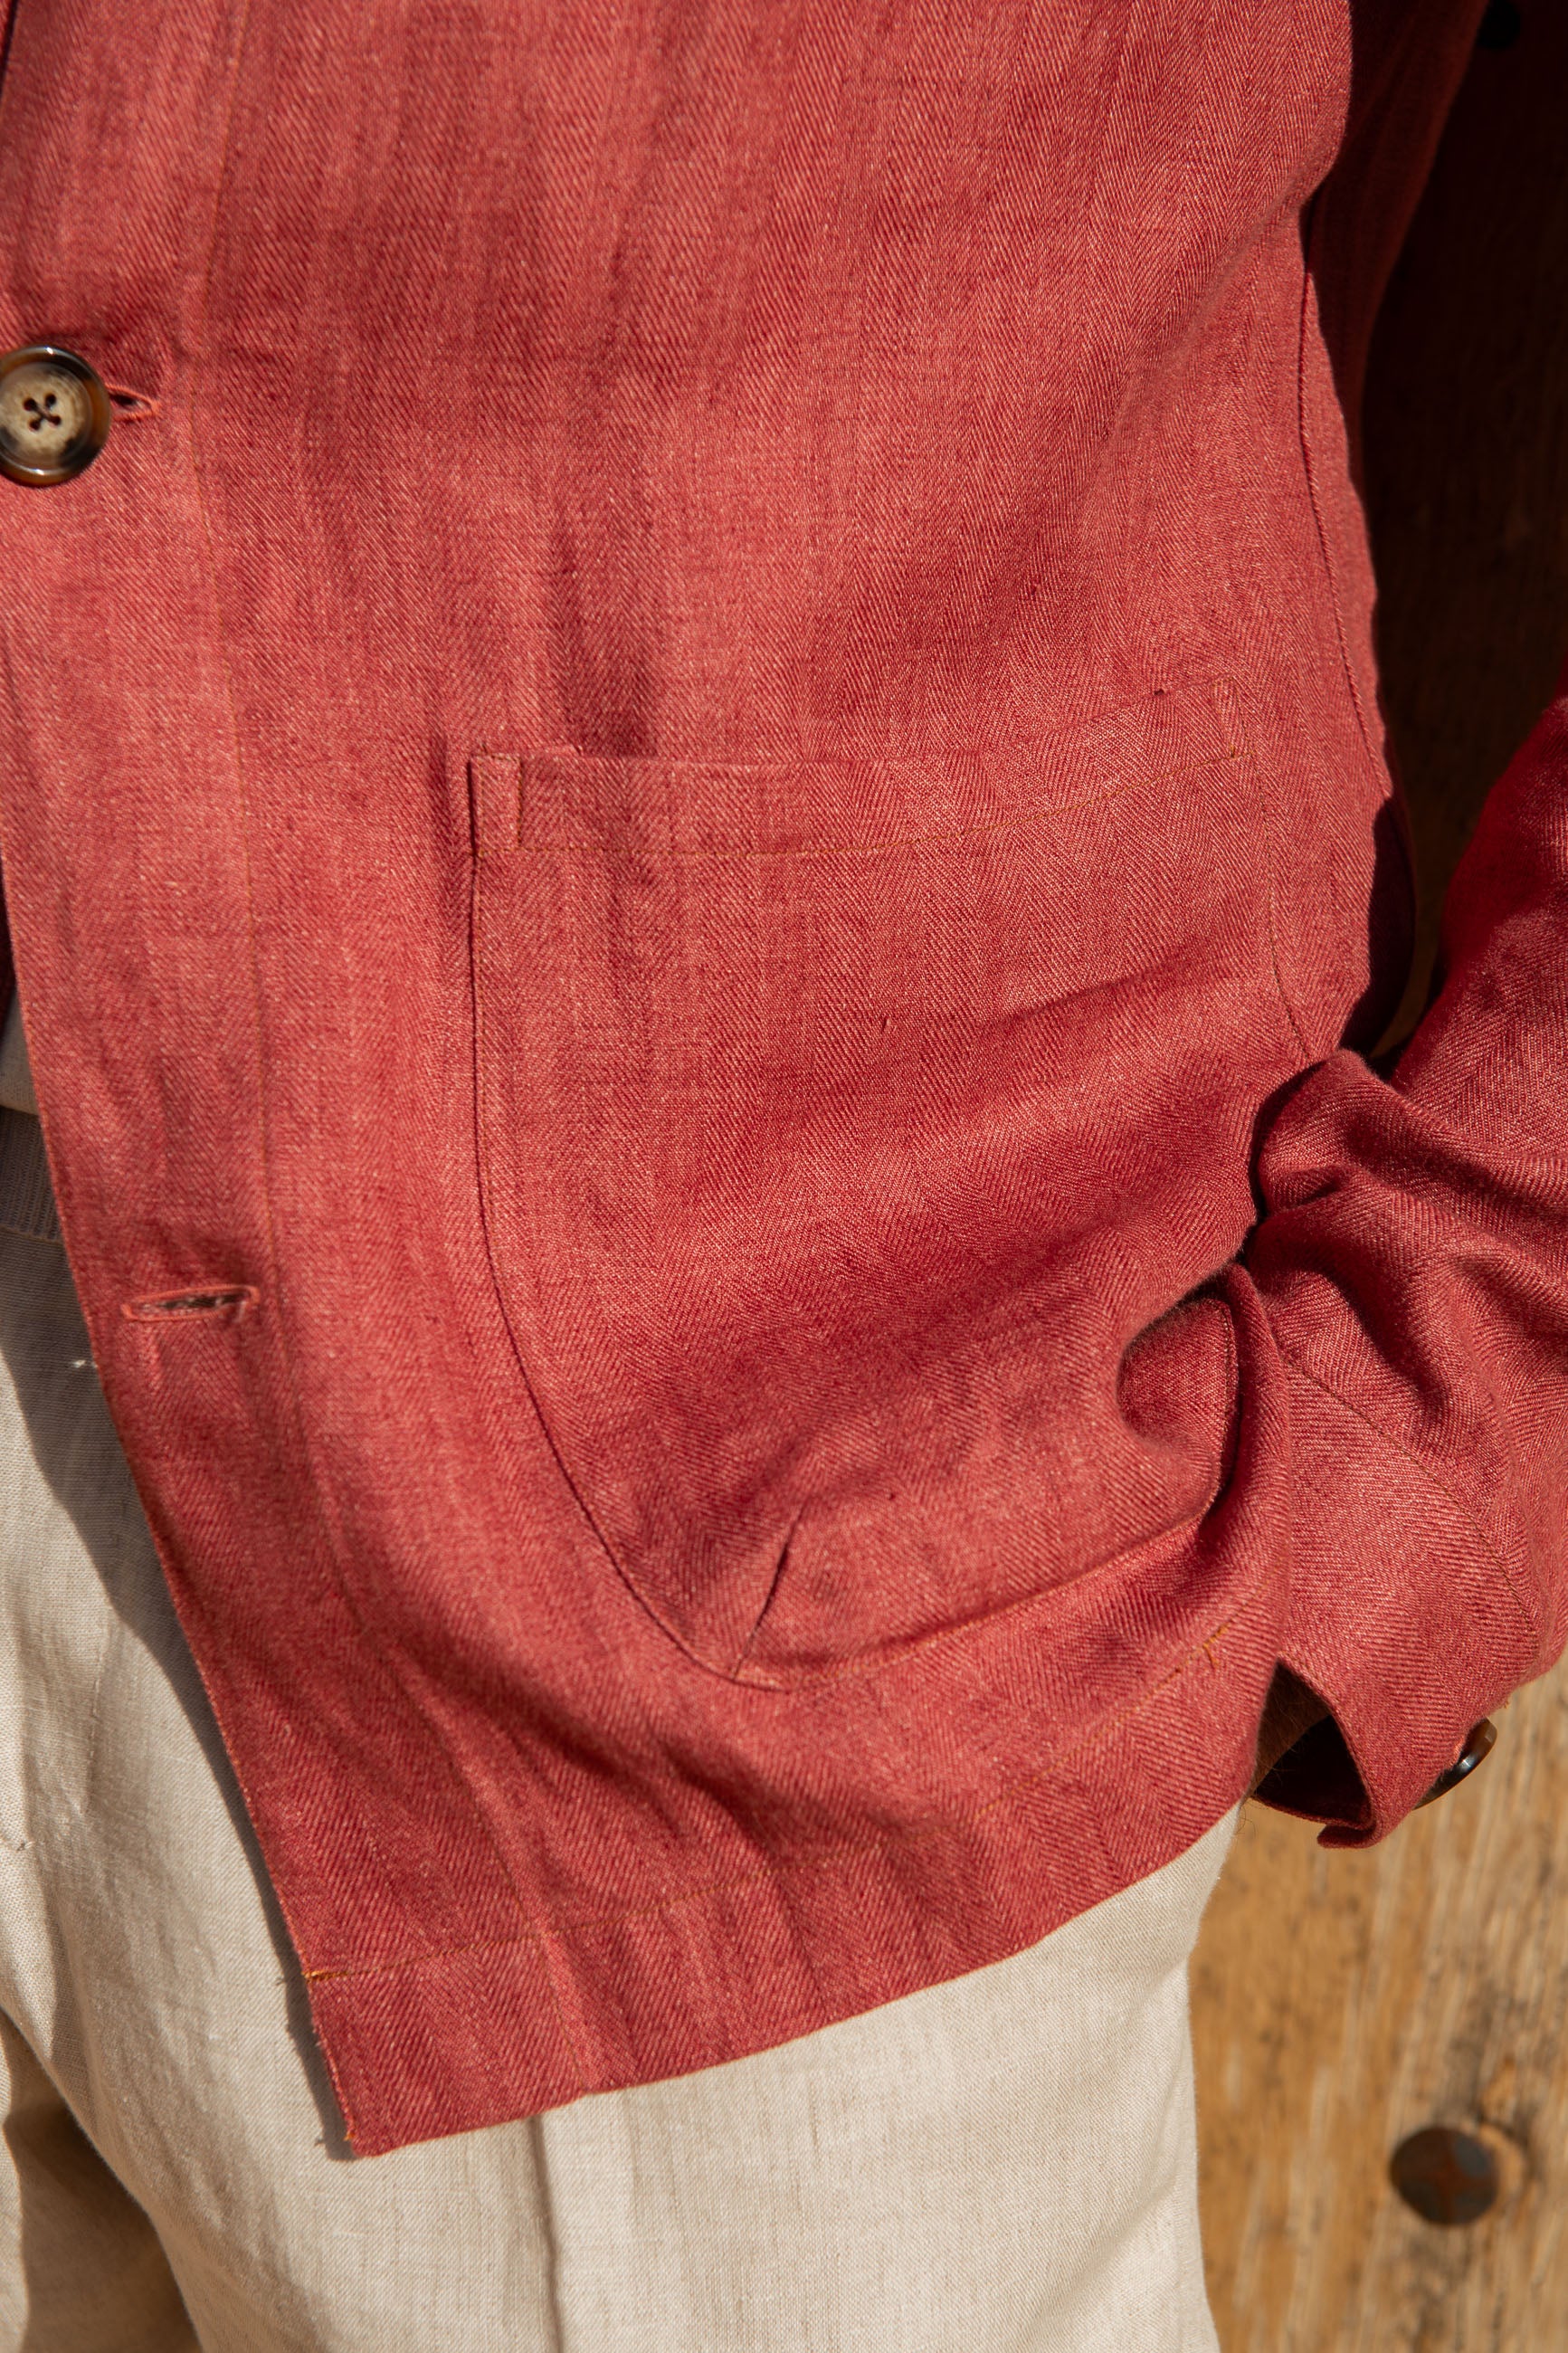  Red Herringbone Linen Jacket, Red Linen Jacket, Linen Casual Red summer jacket, Linen summer red jacket, Giacca di lino rossa a spiga, giacca di lino rossa, giacca estiva casual di lino rossa, giacca estiva di lino rossa, Veste en lin à chevrons rouges, veste en lin rouge, veste d'été décontractée en lin rouge, veste d'été en lin rouge, 